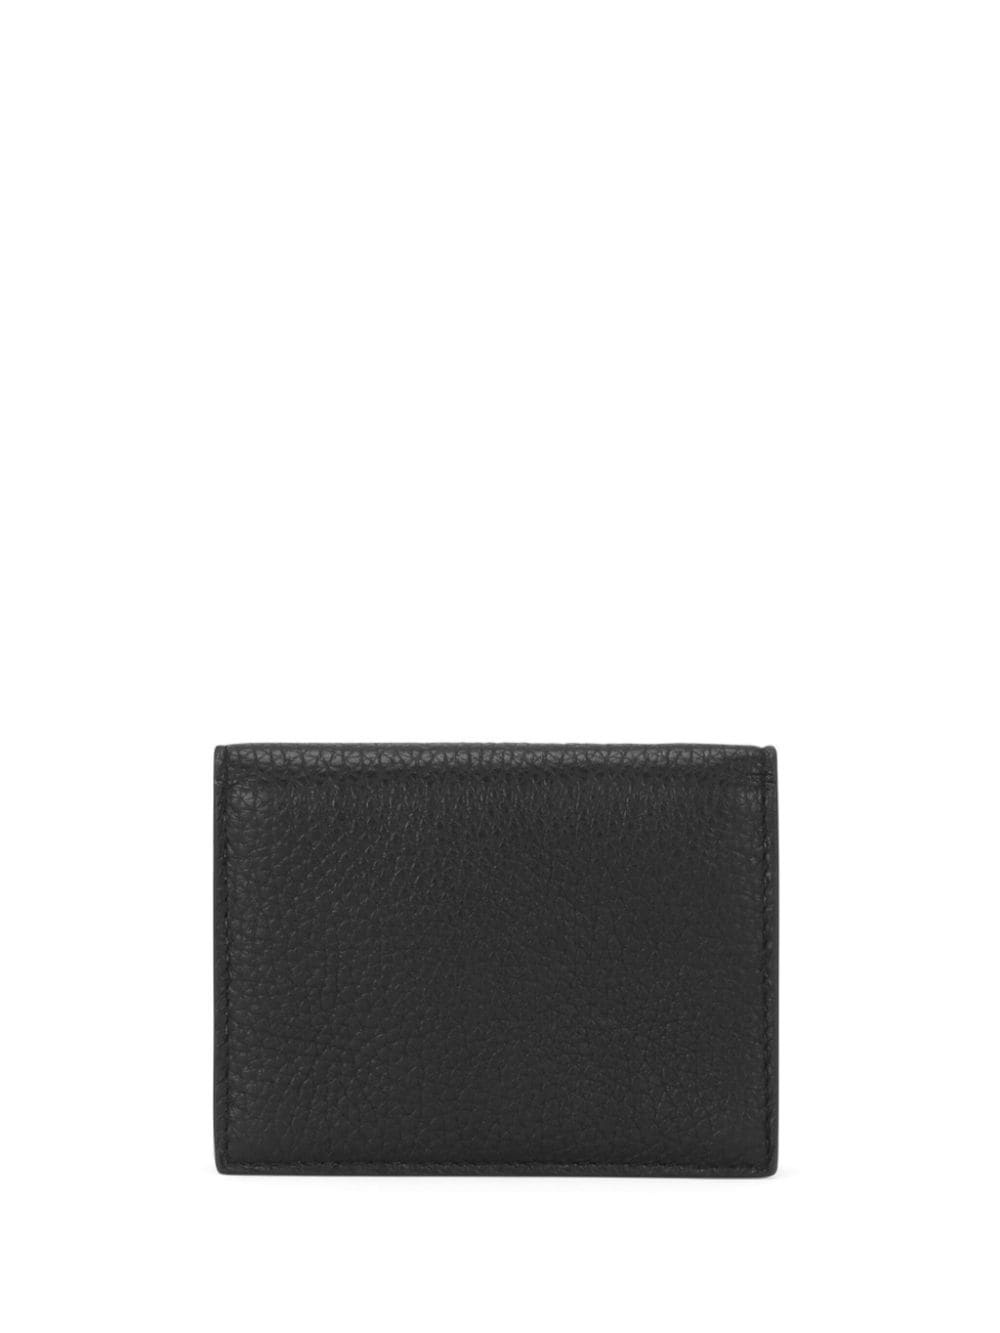 DG logo leather wallet - 2